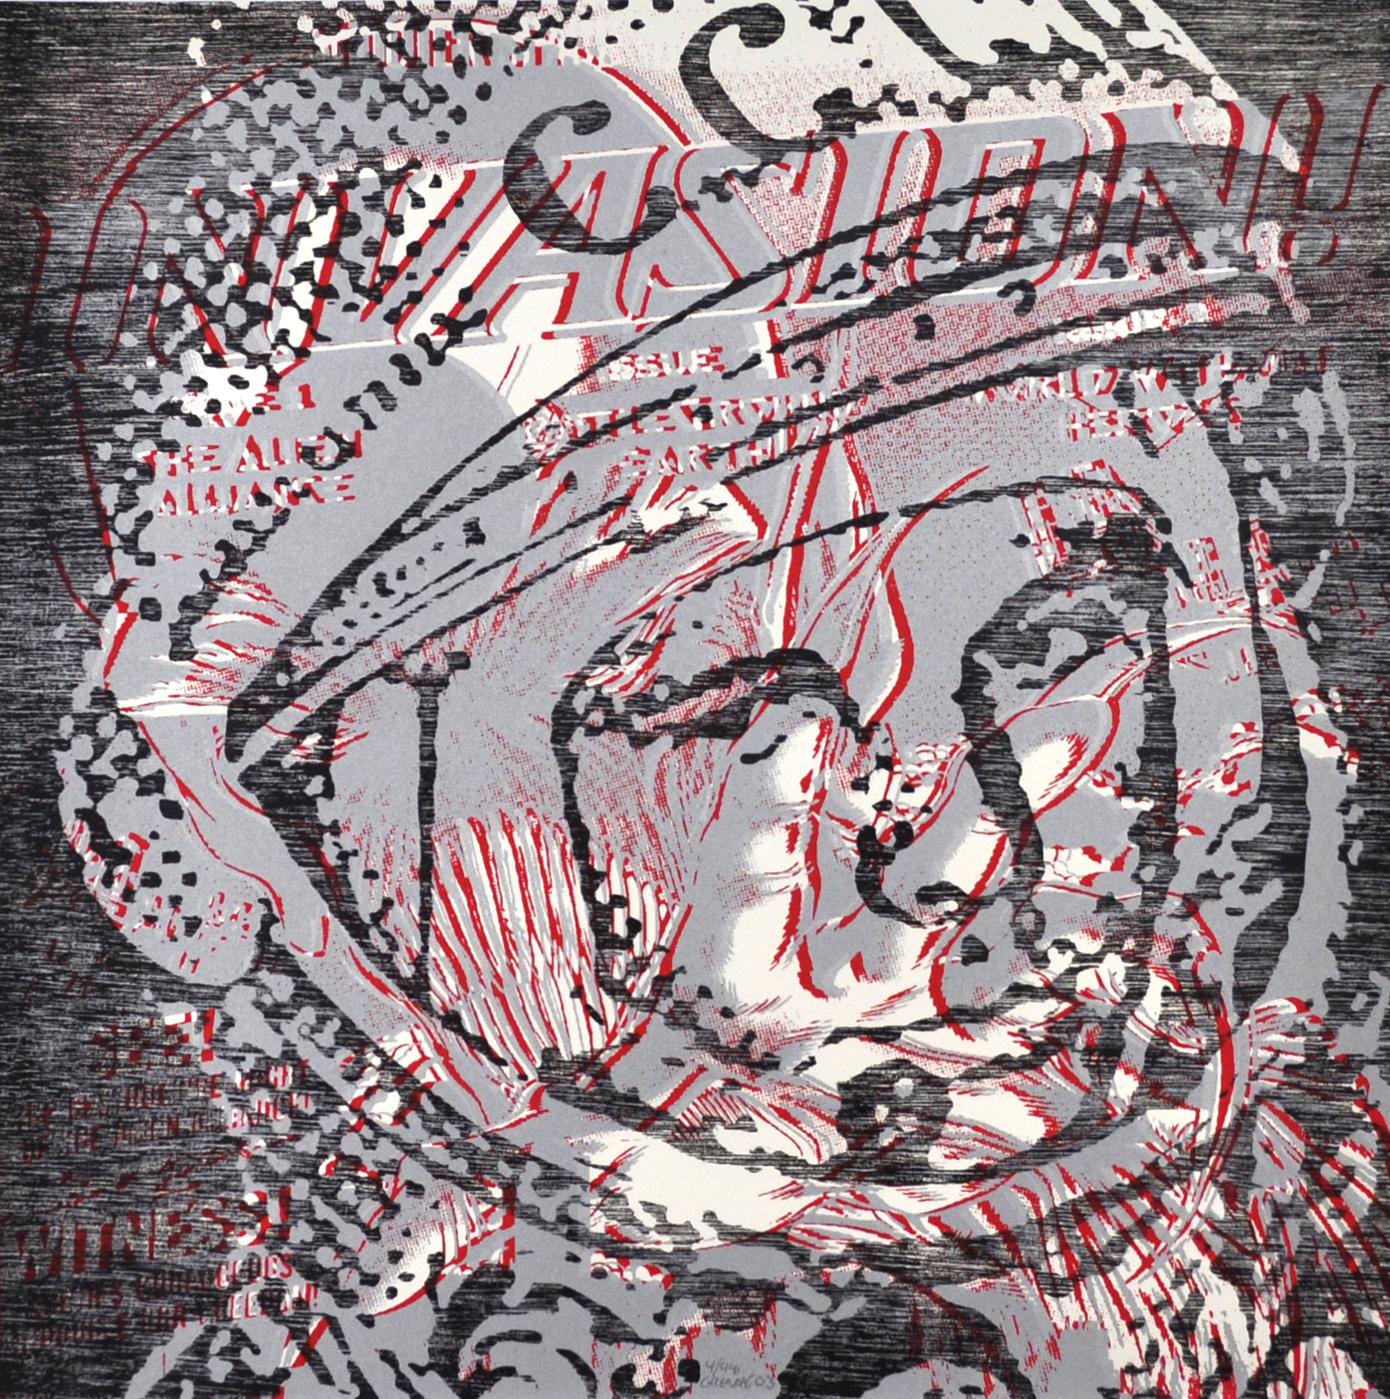 Scandinavian Woodcut and Screen Print  "Yuri Gagarin", numbered and signed - Mixed Media Art by Lars Grenaae